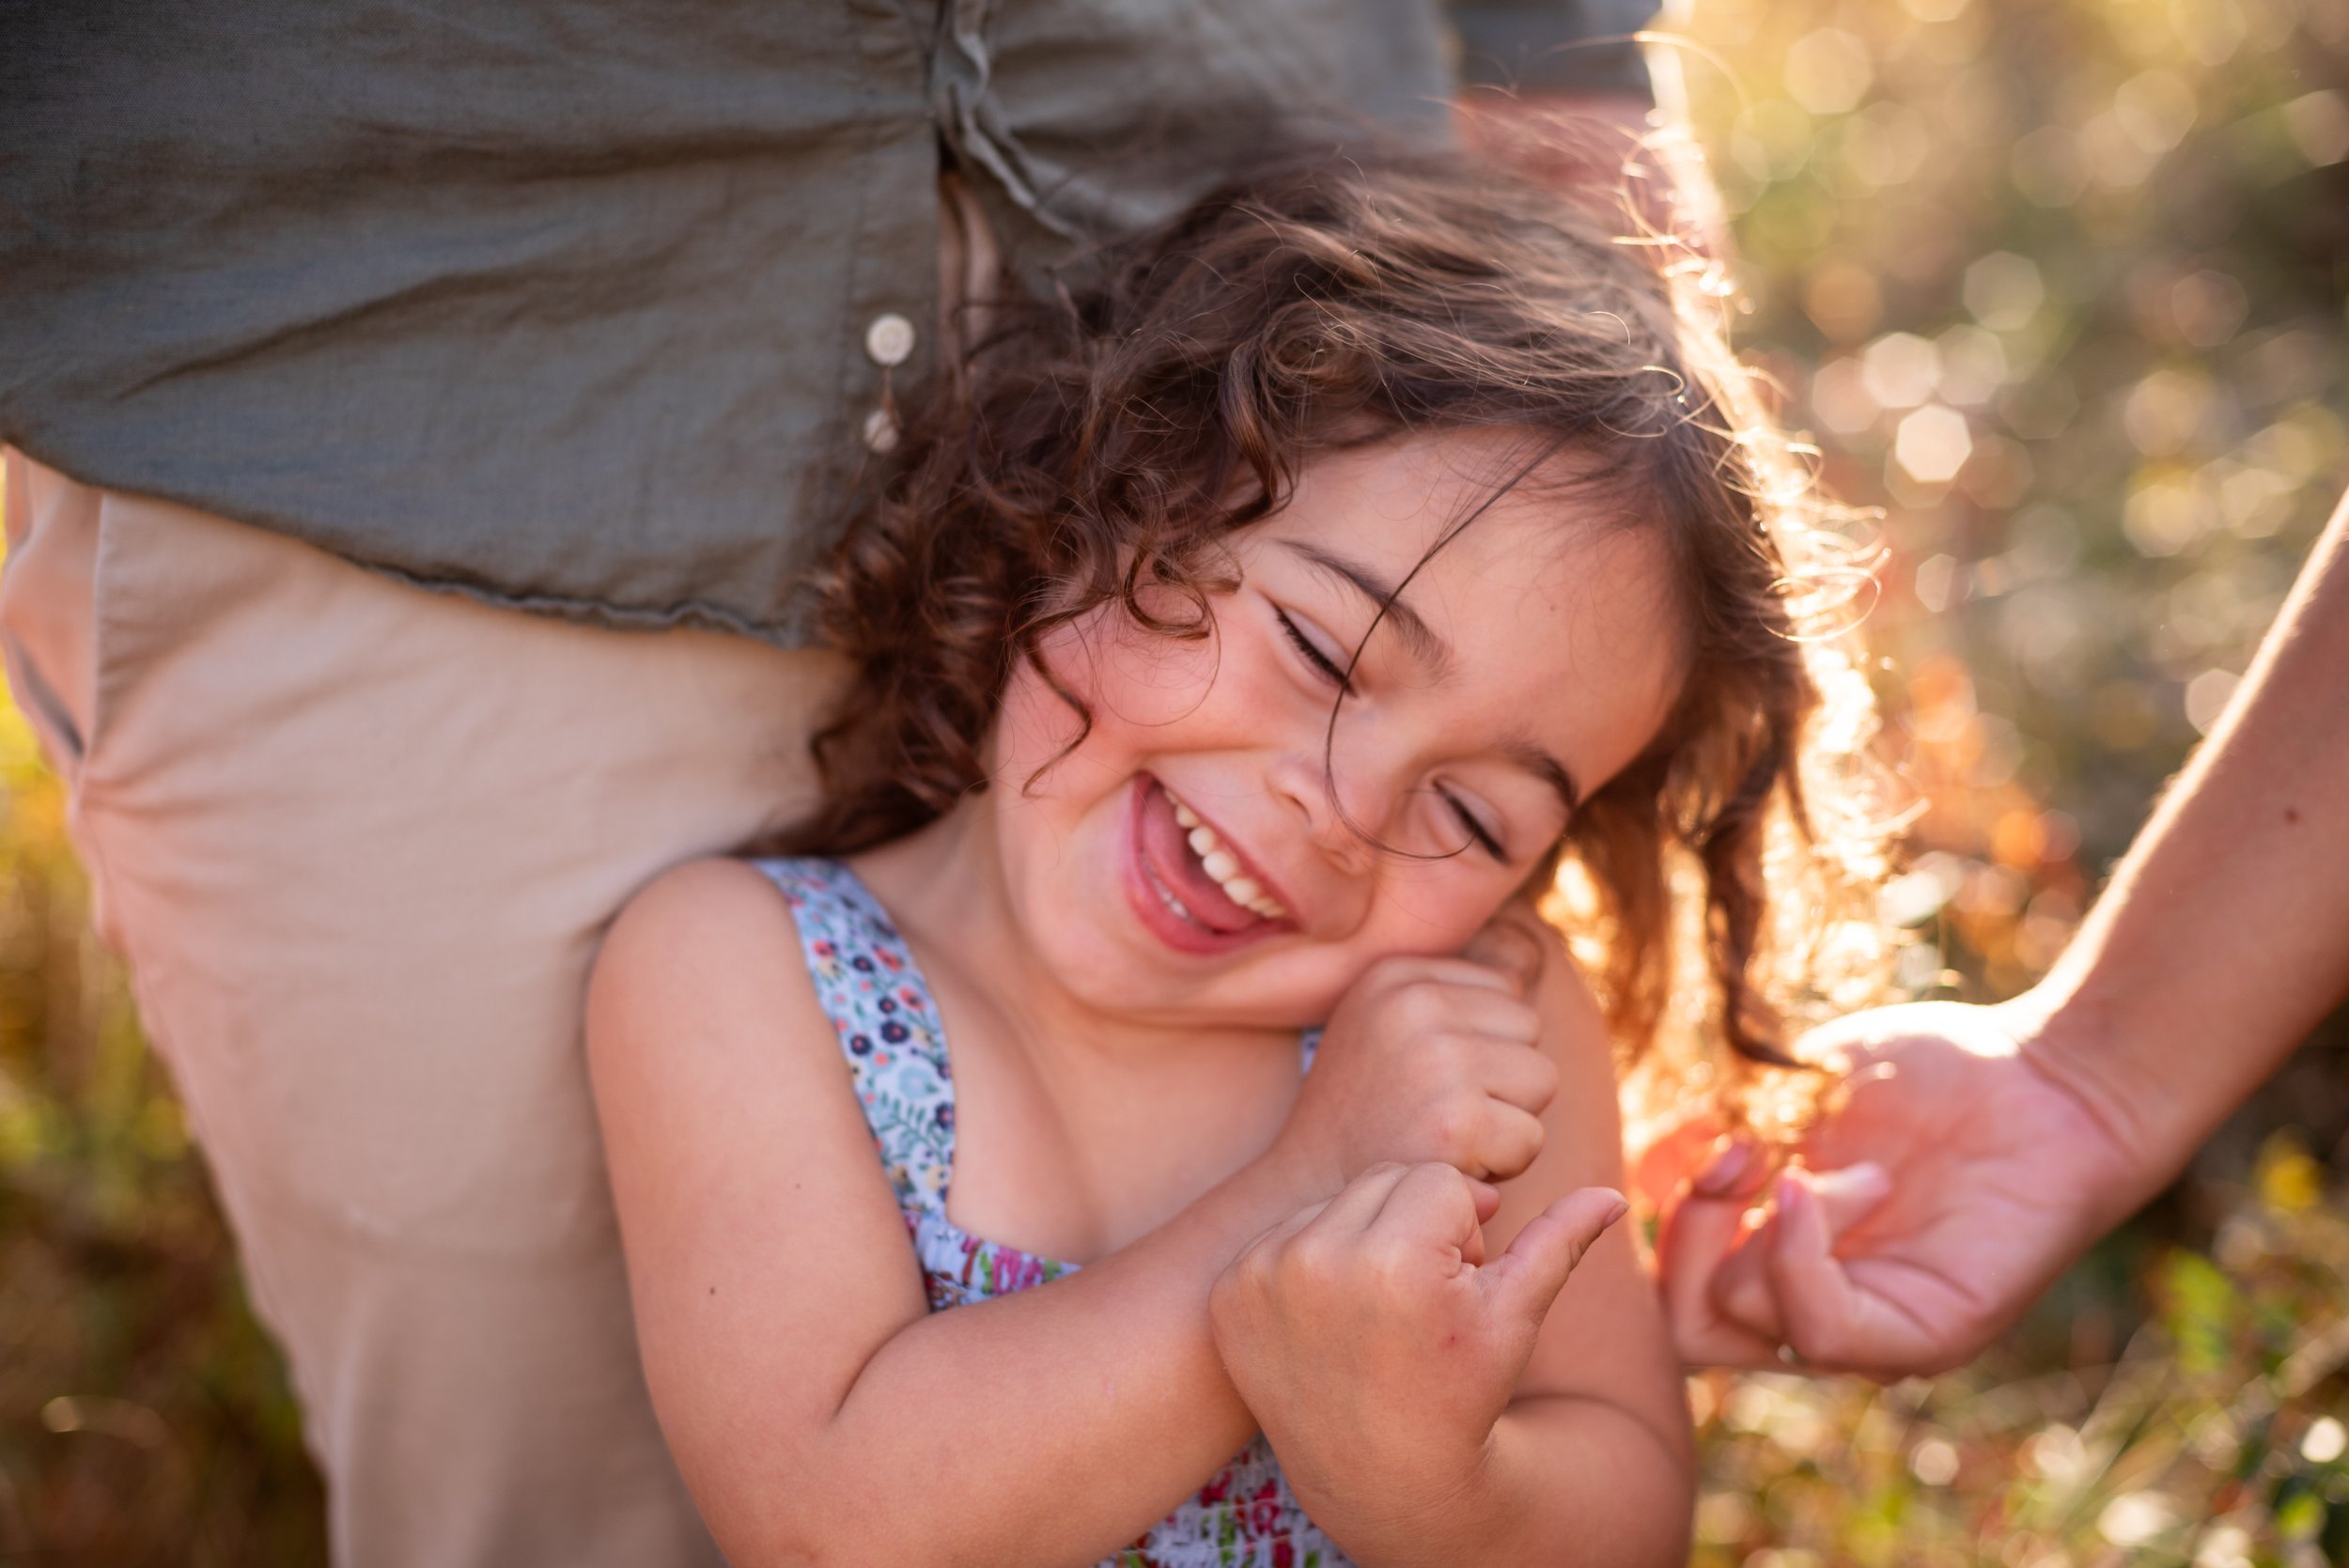 lindsay murphy photography | portland maine family photographer | little girl laughing in sun.jpg